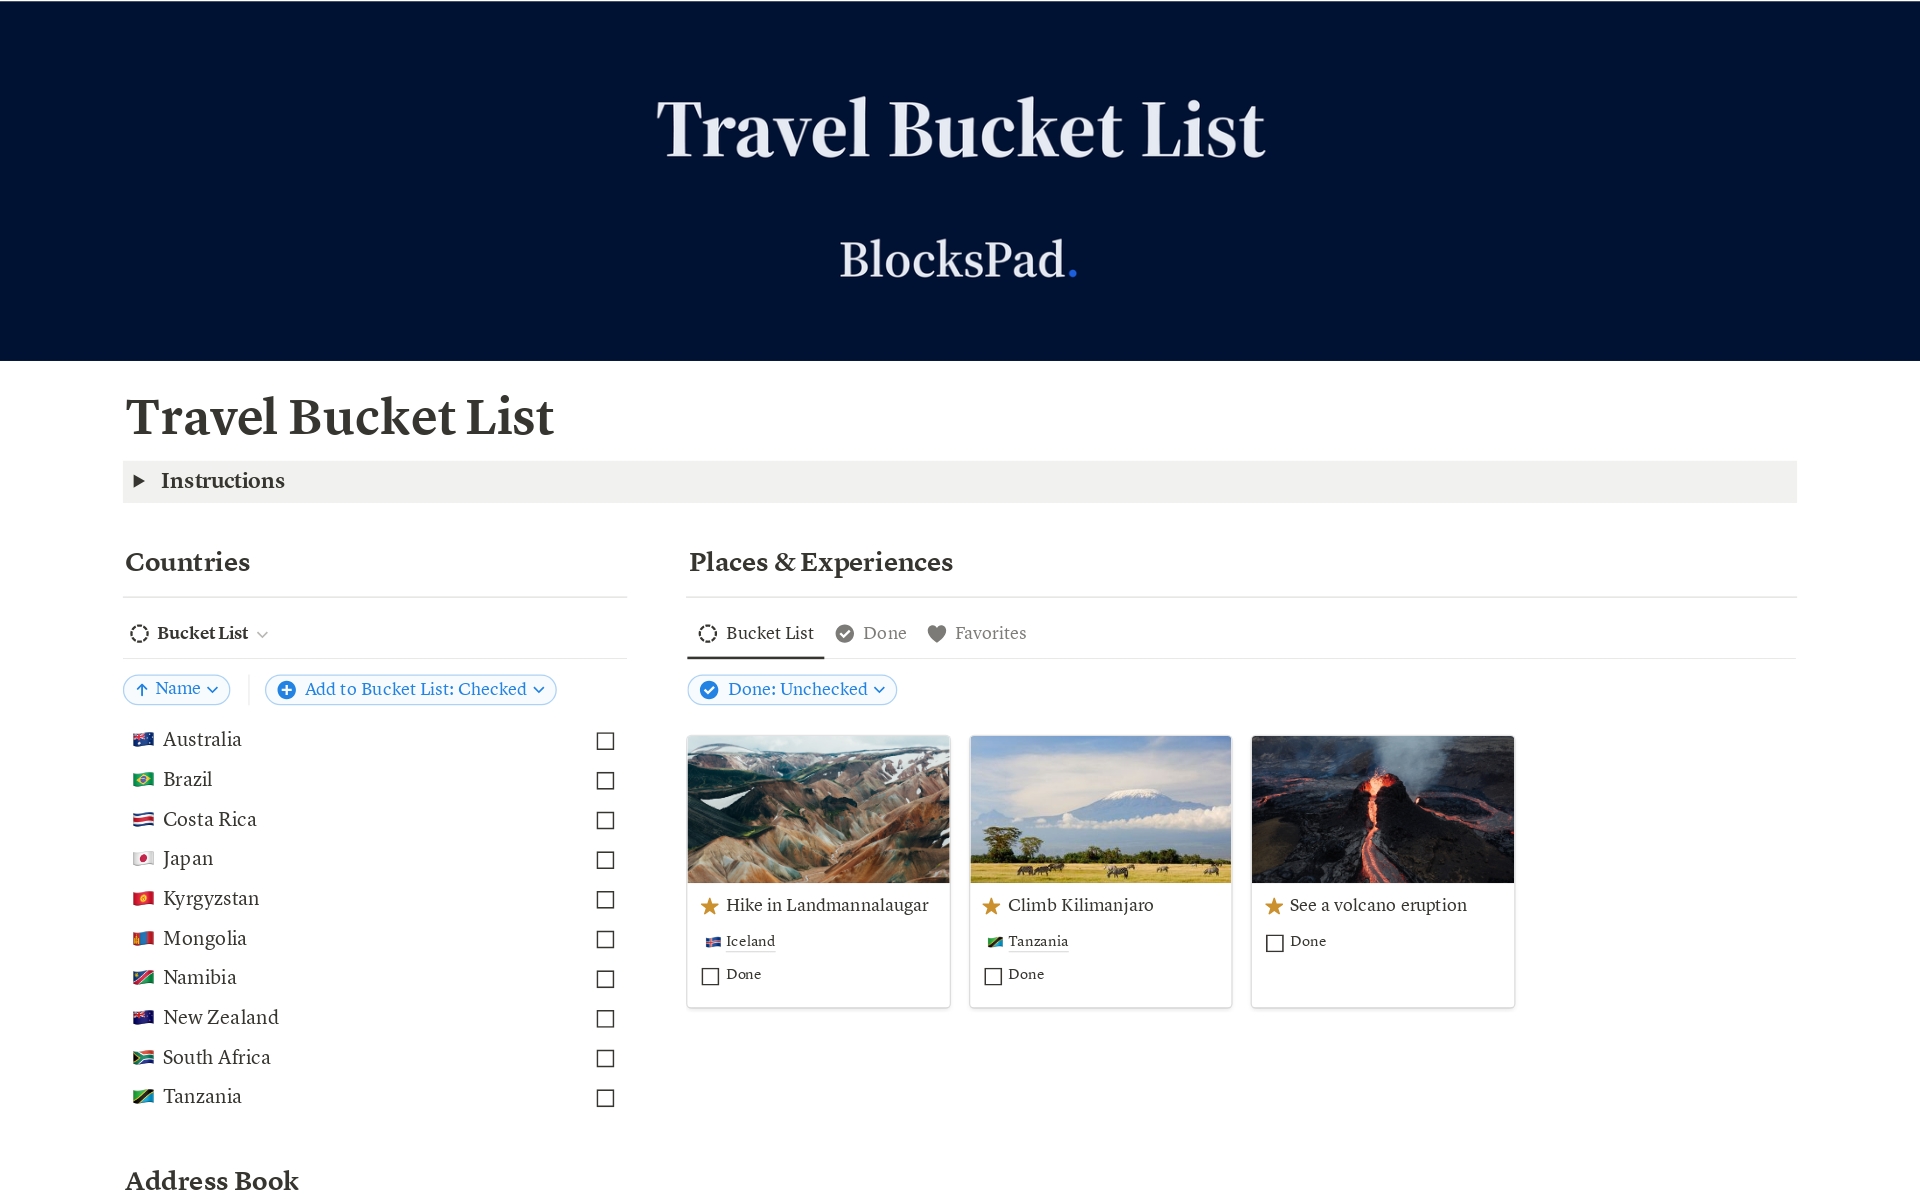 Vista previa de plantilla para Travel Bucket List